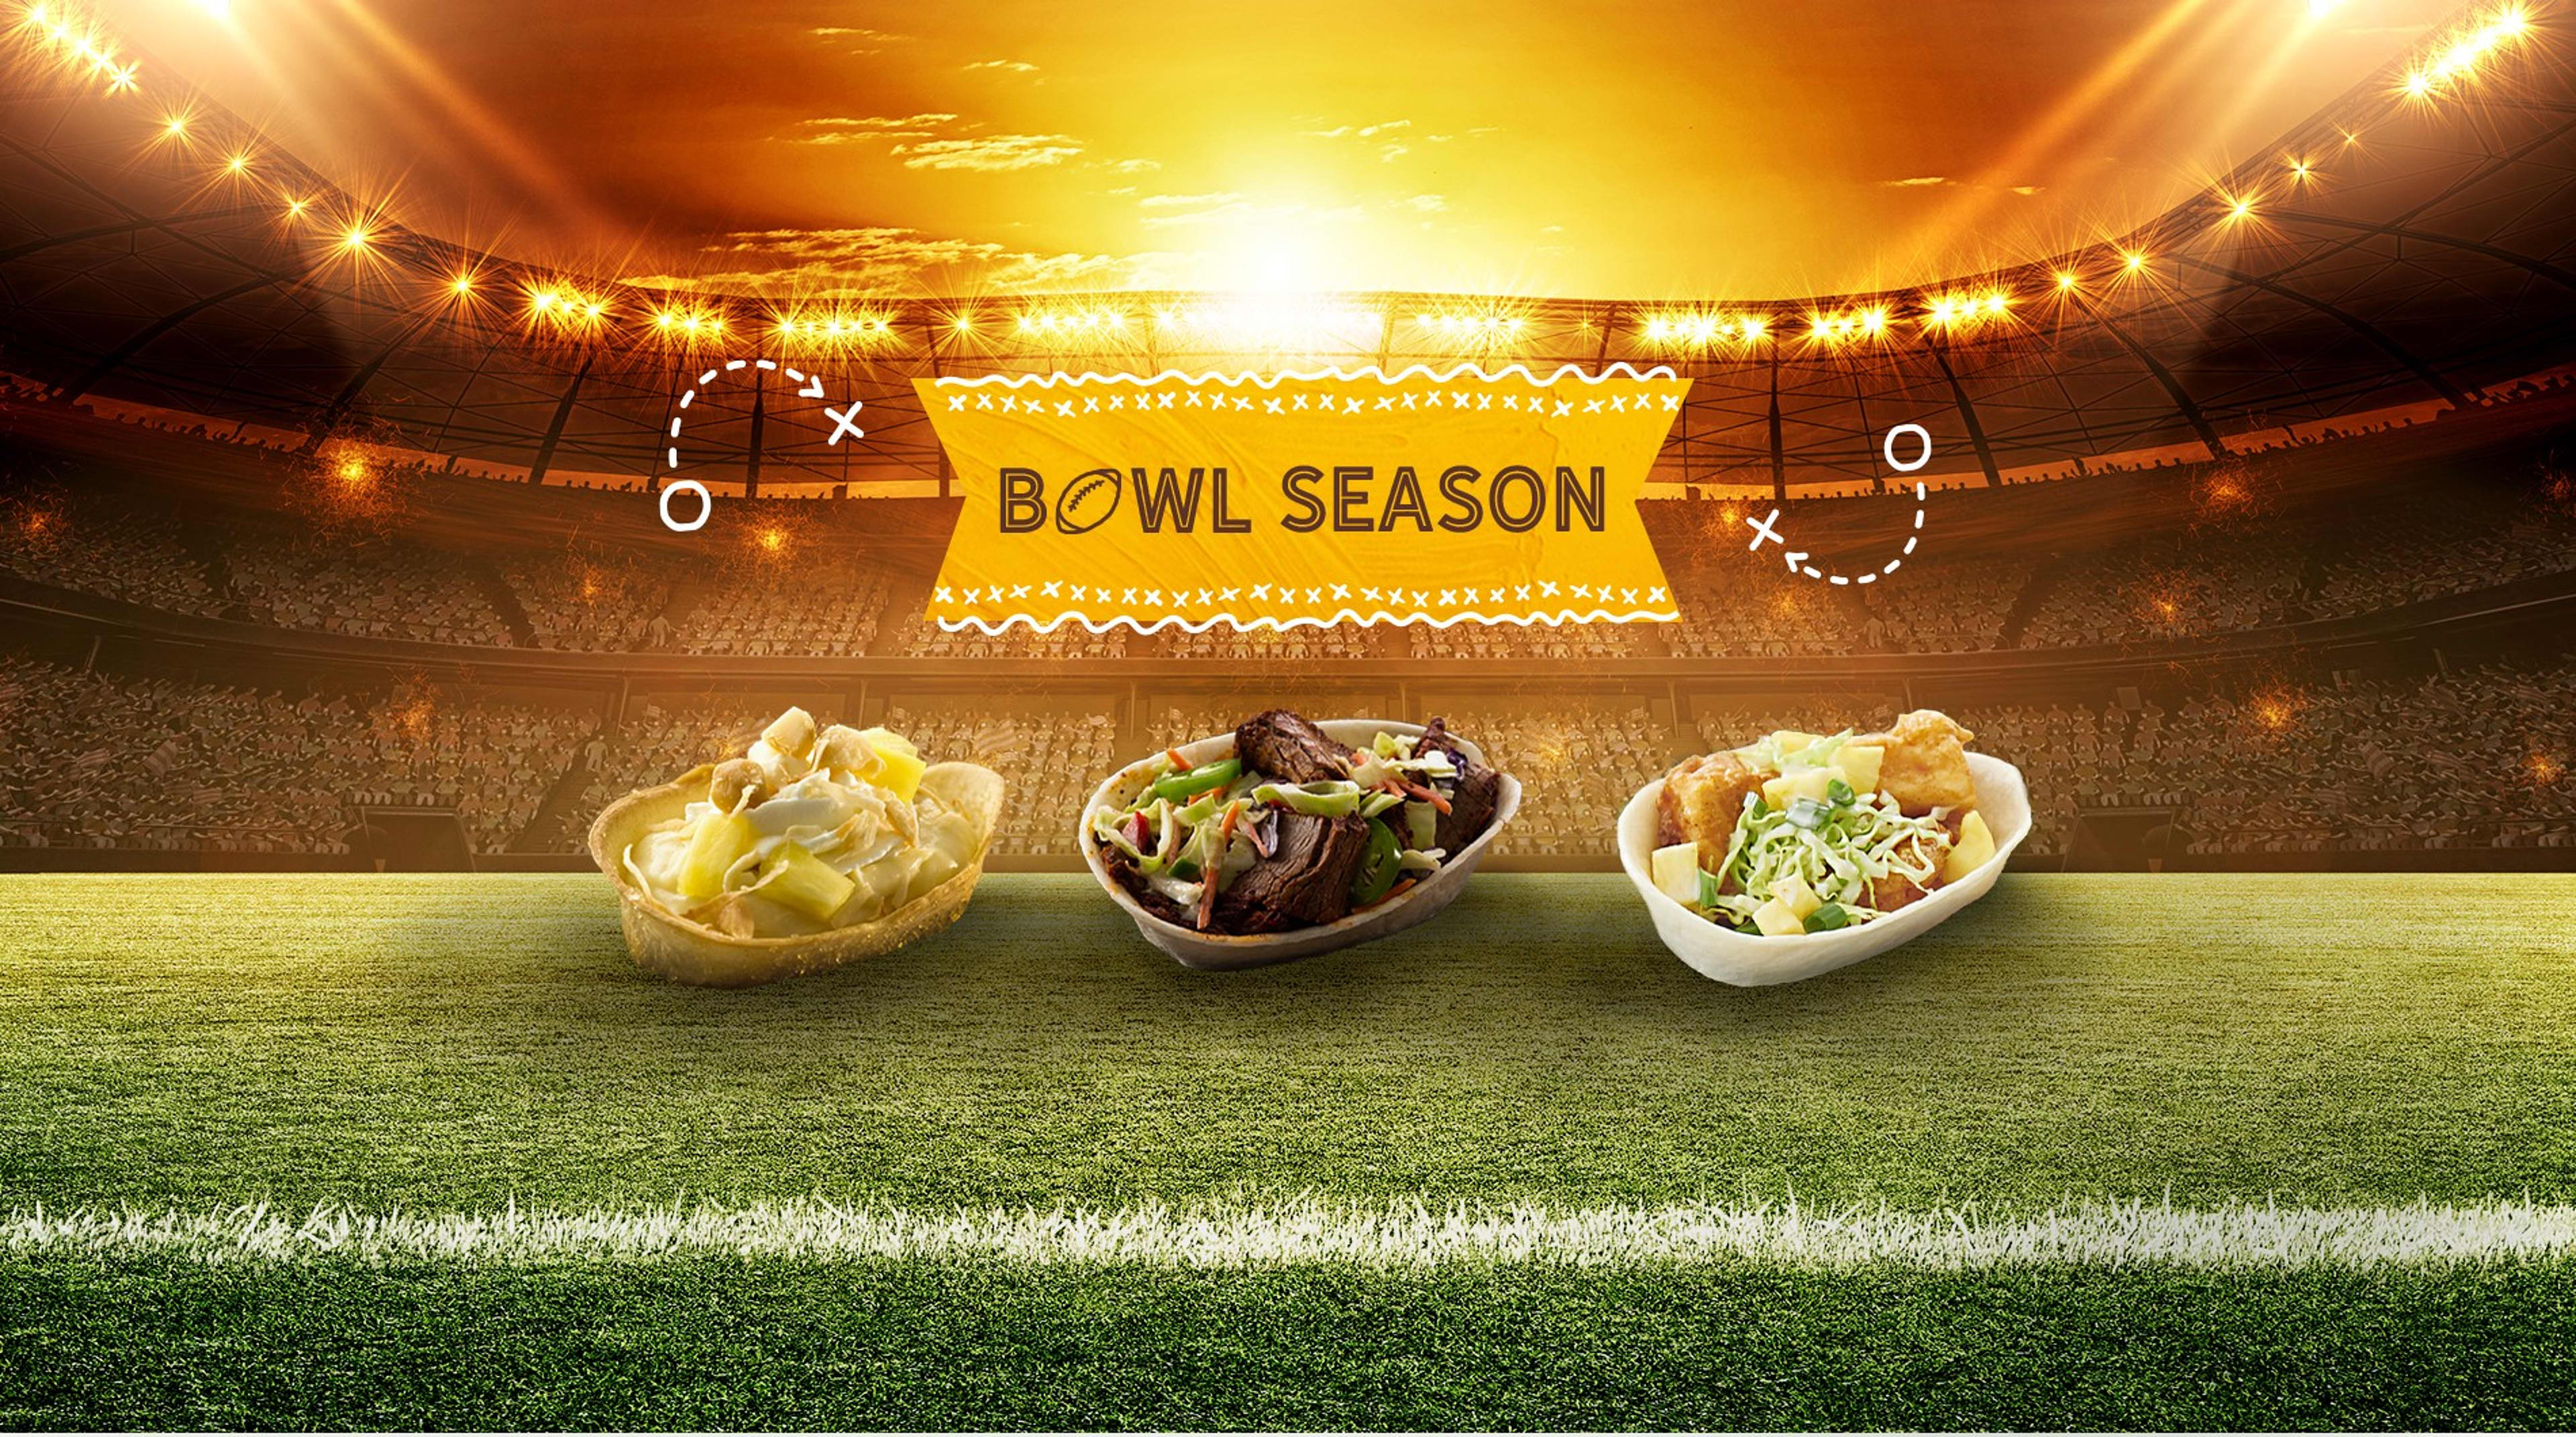 Bowl Season - Taco bowls on a football field